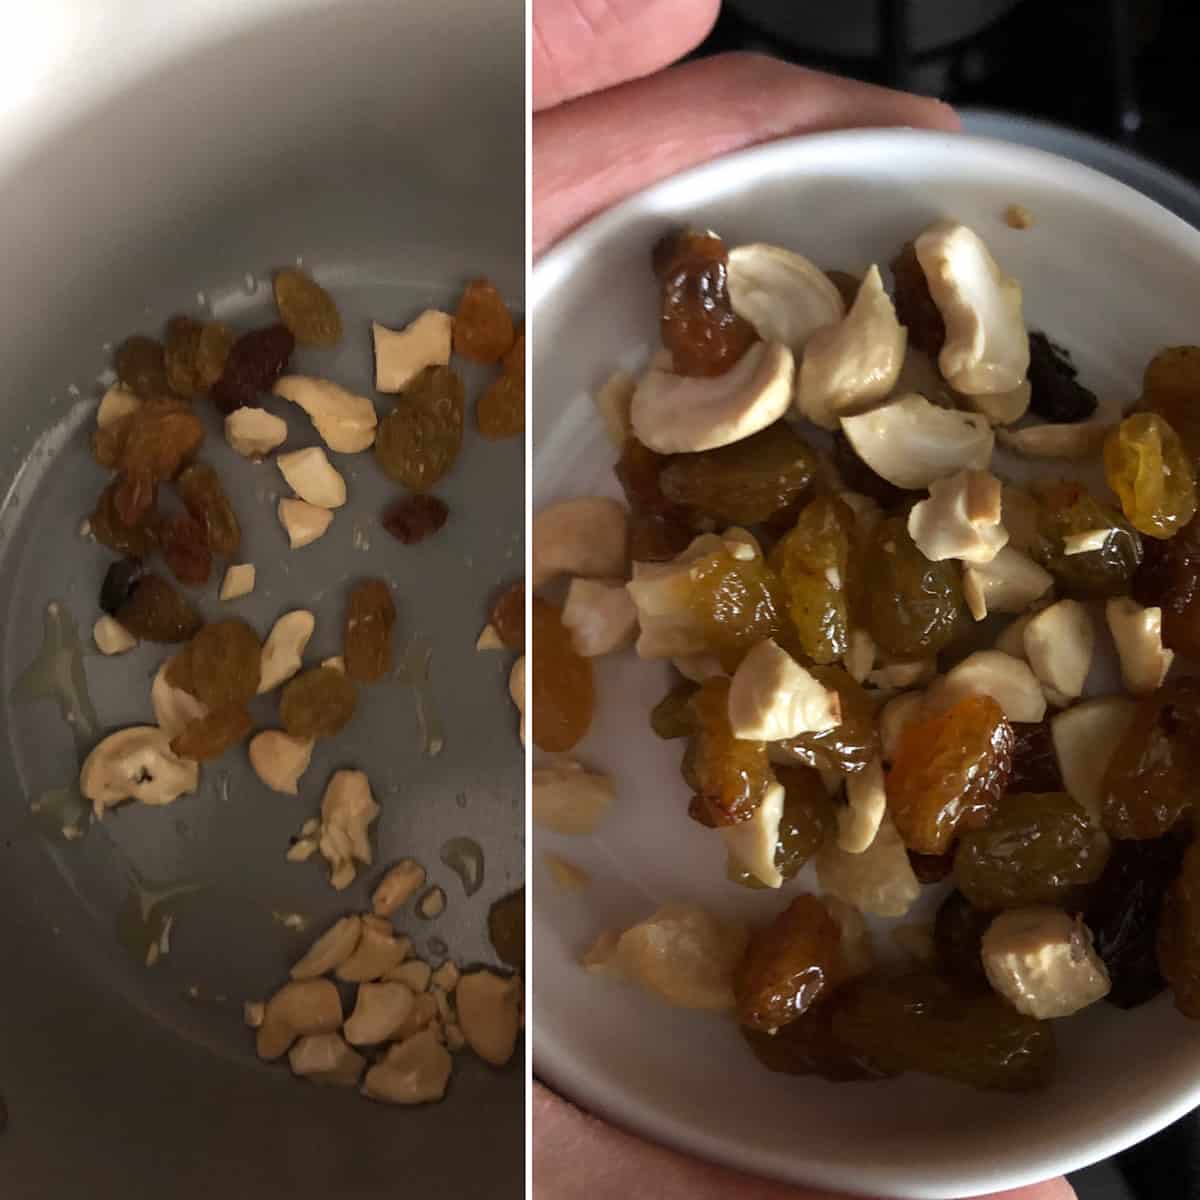 Fried cashews and raisins until golden